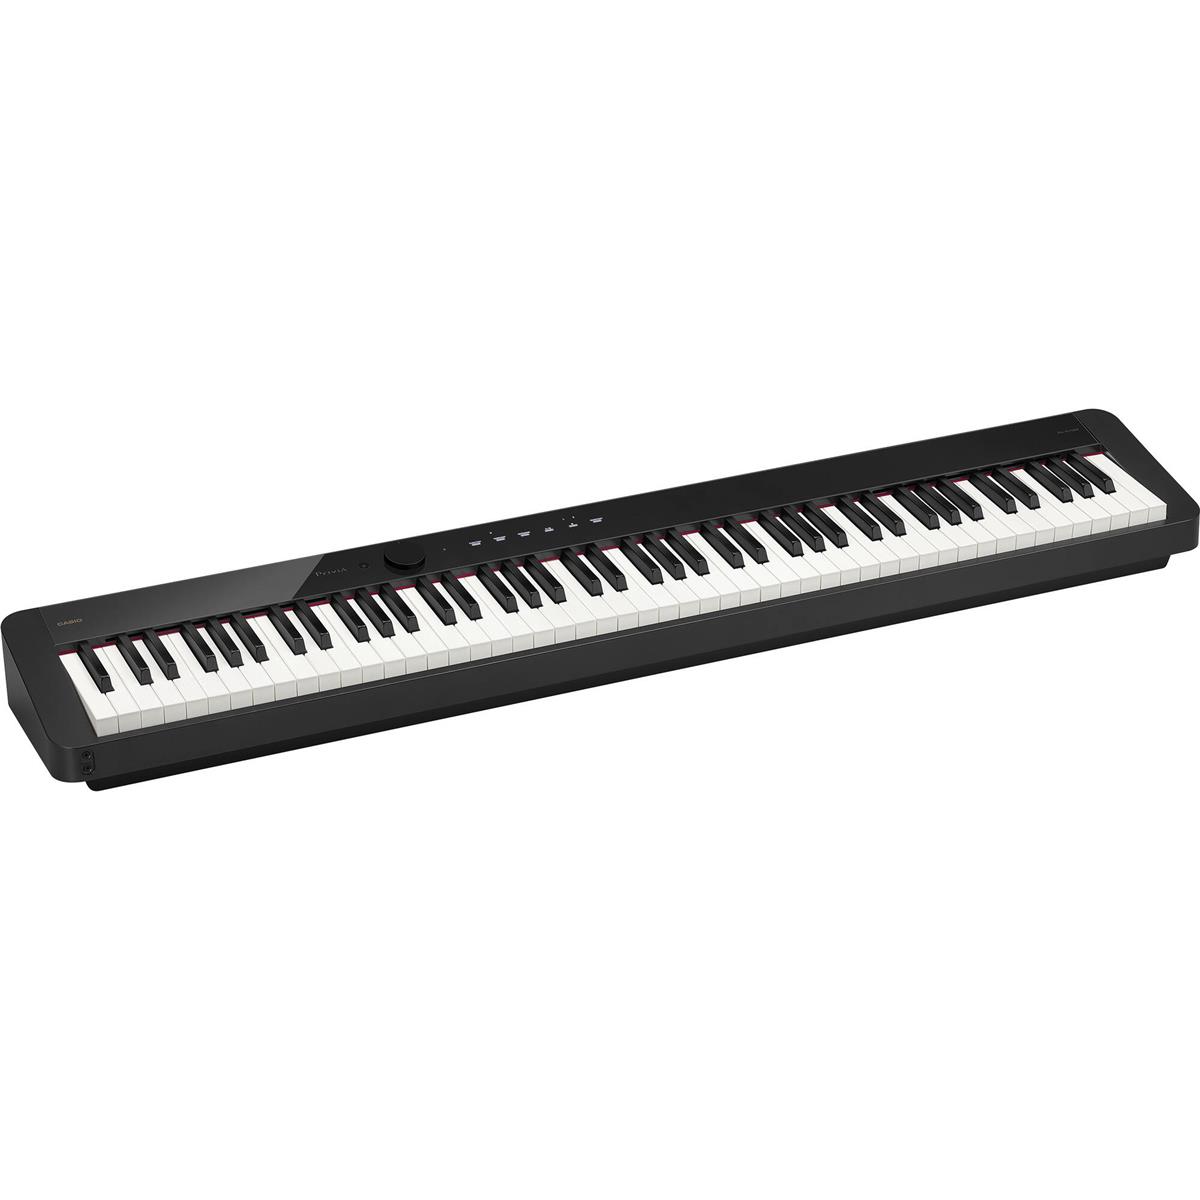 Casio PX-S1100 Privia 88-Key Slim Digital Stage Piano $499 + free s/h